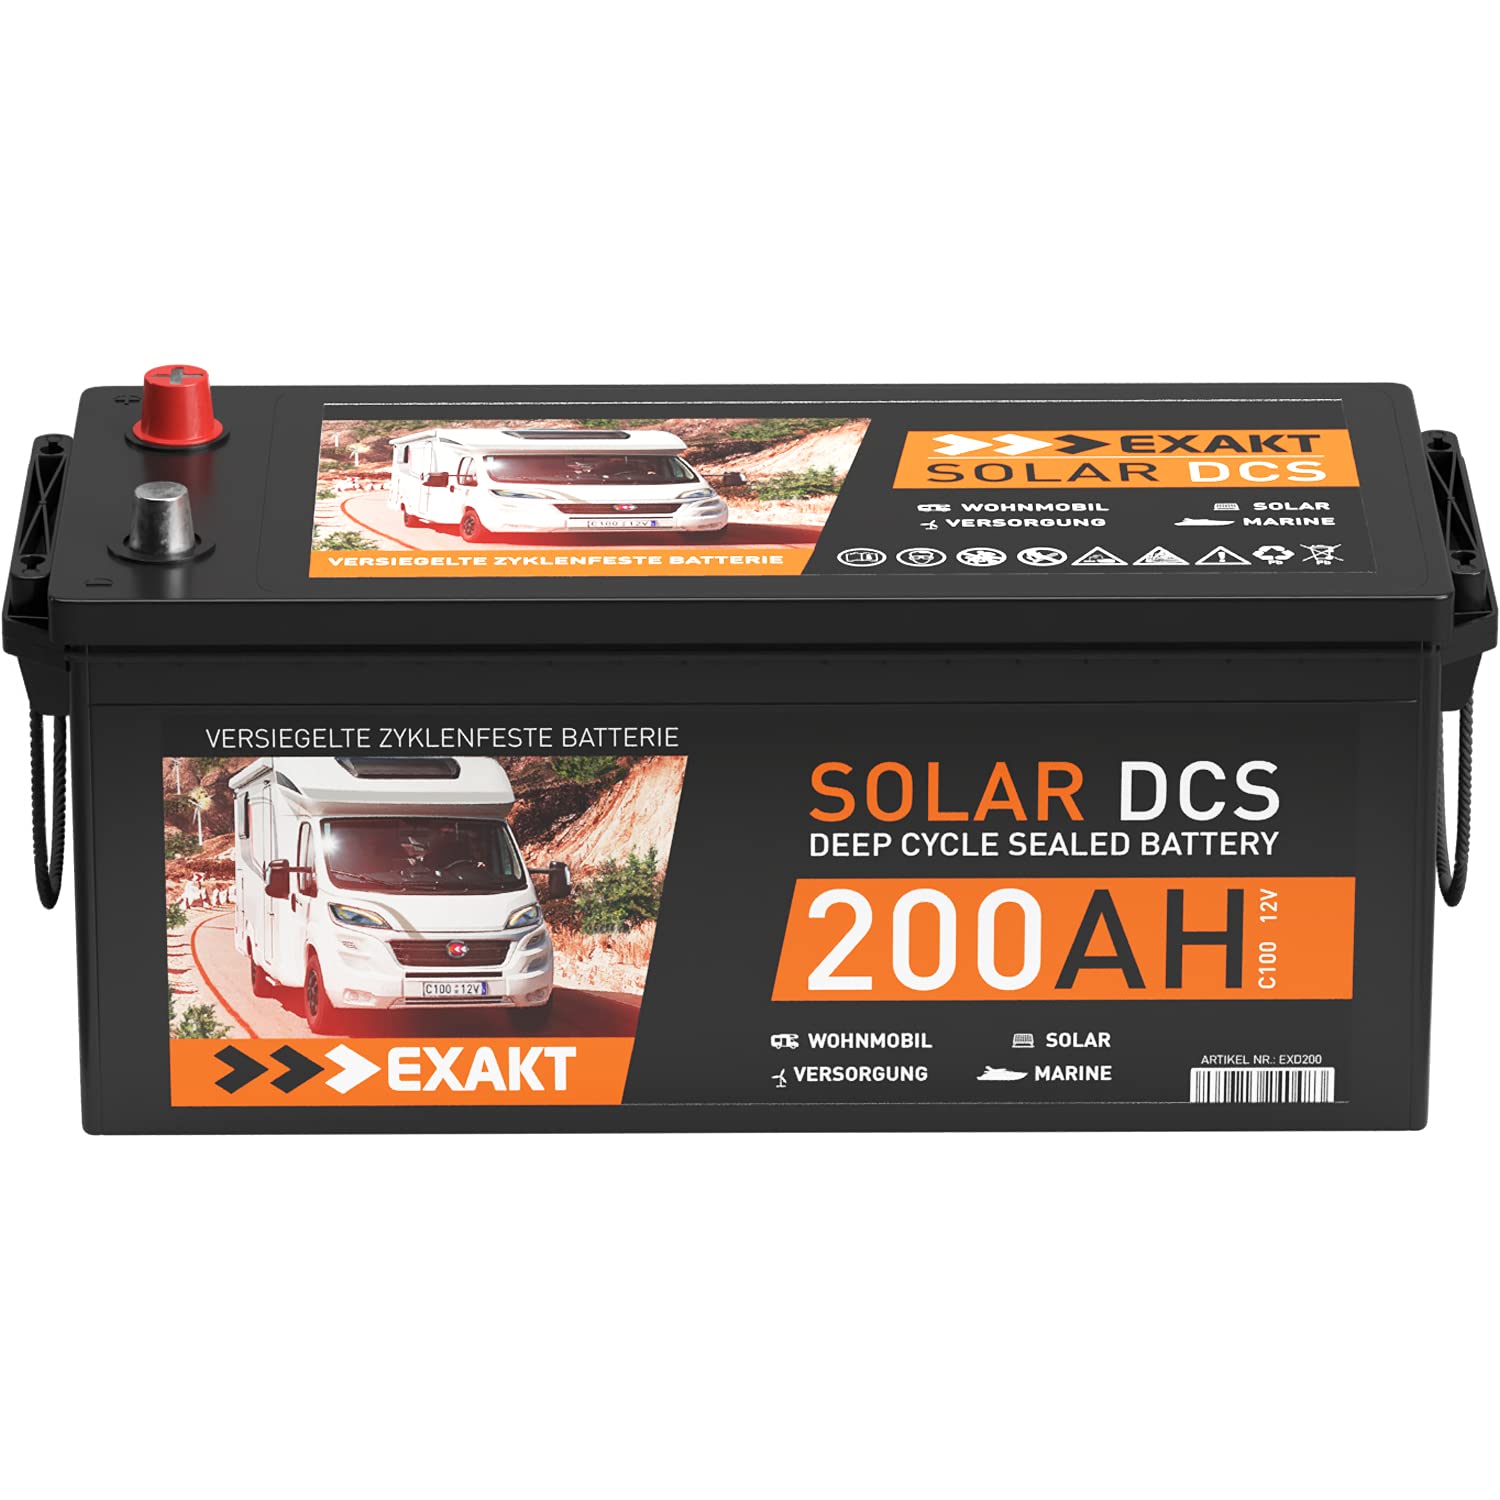 Solarbatterie 12V 200Ah EXAKT DCS Wohnmobil Versorgung Boot Solar Batterie ersetzt 180Ah 190Ah von Exakt